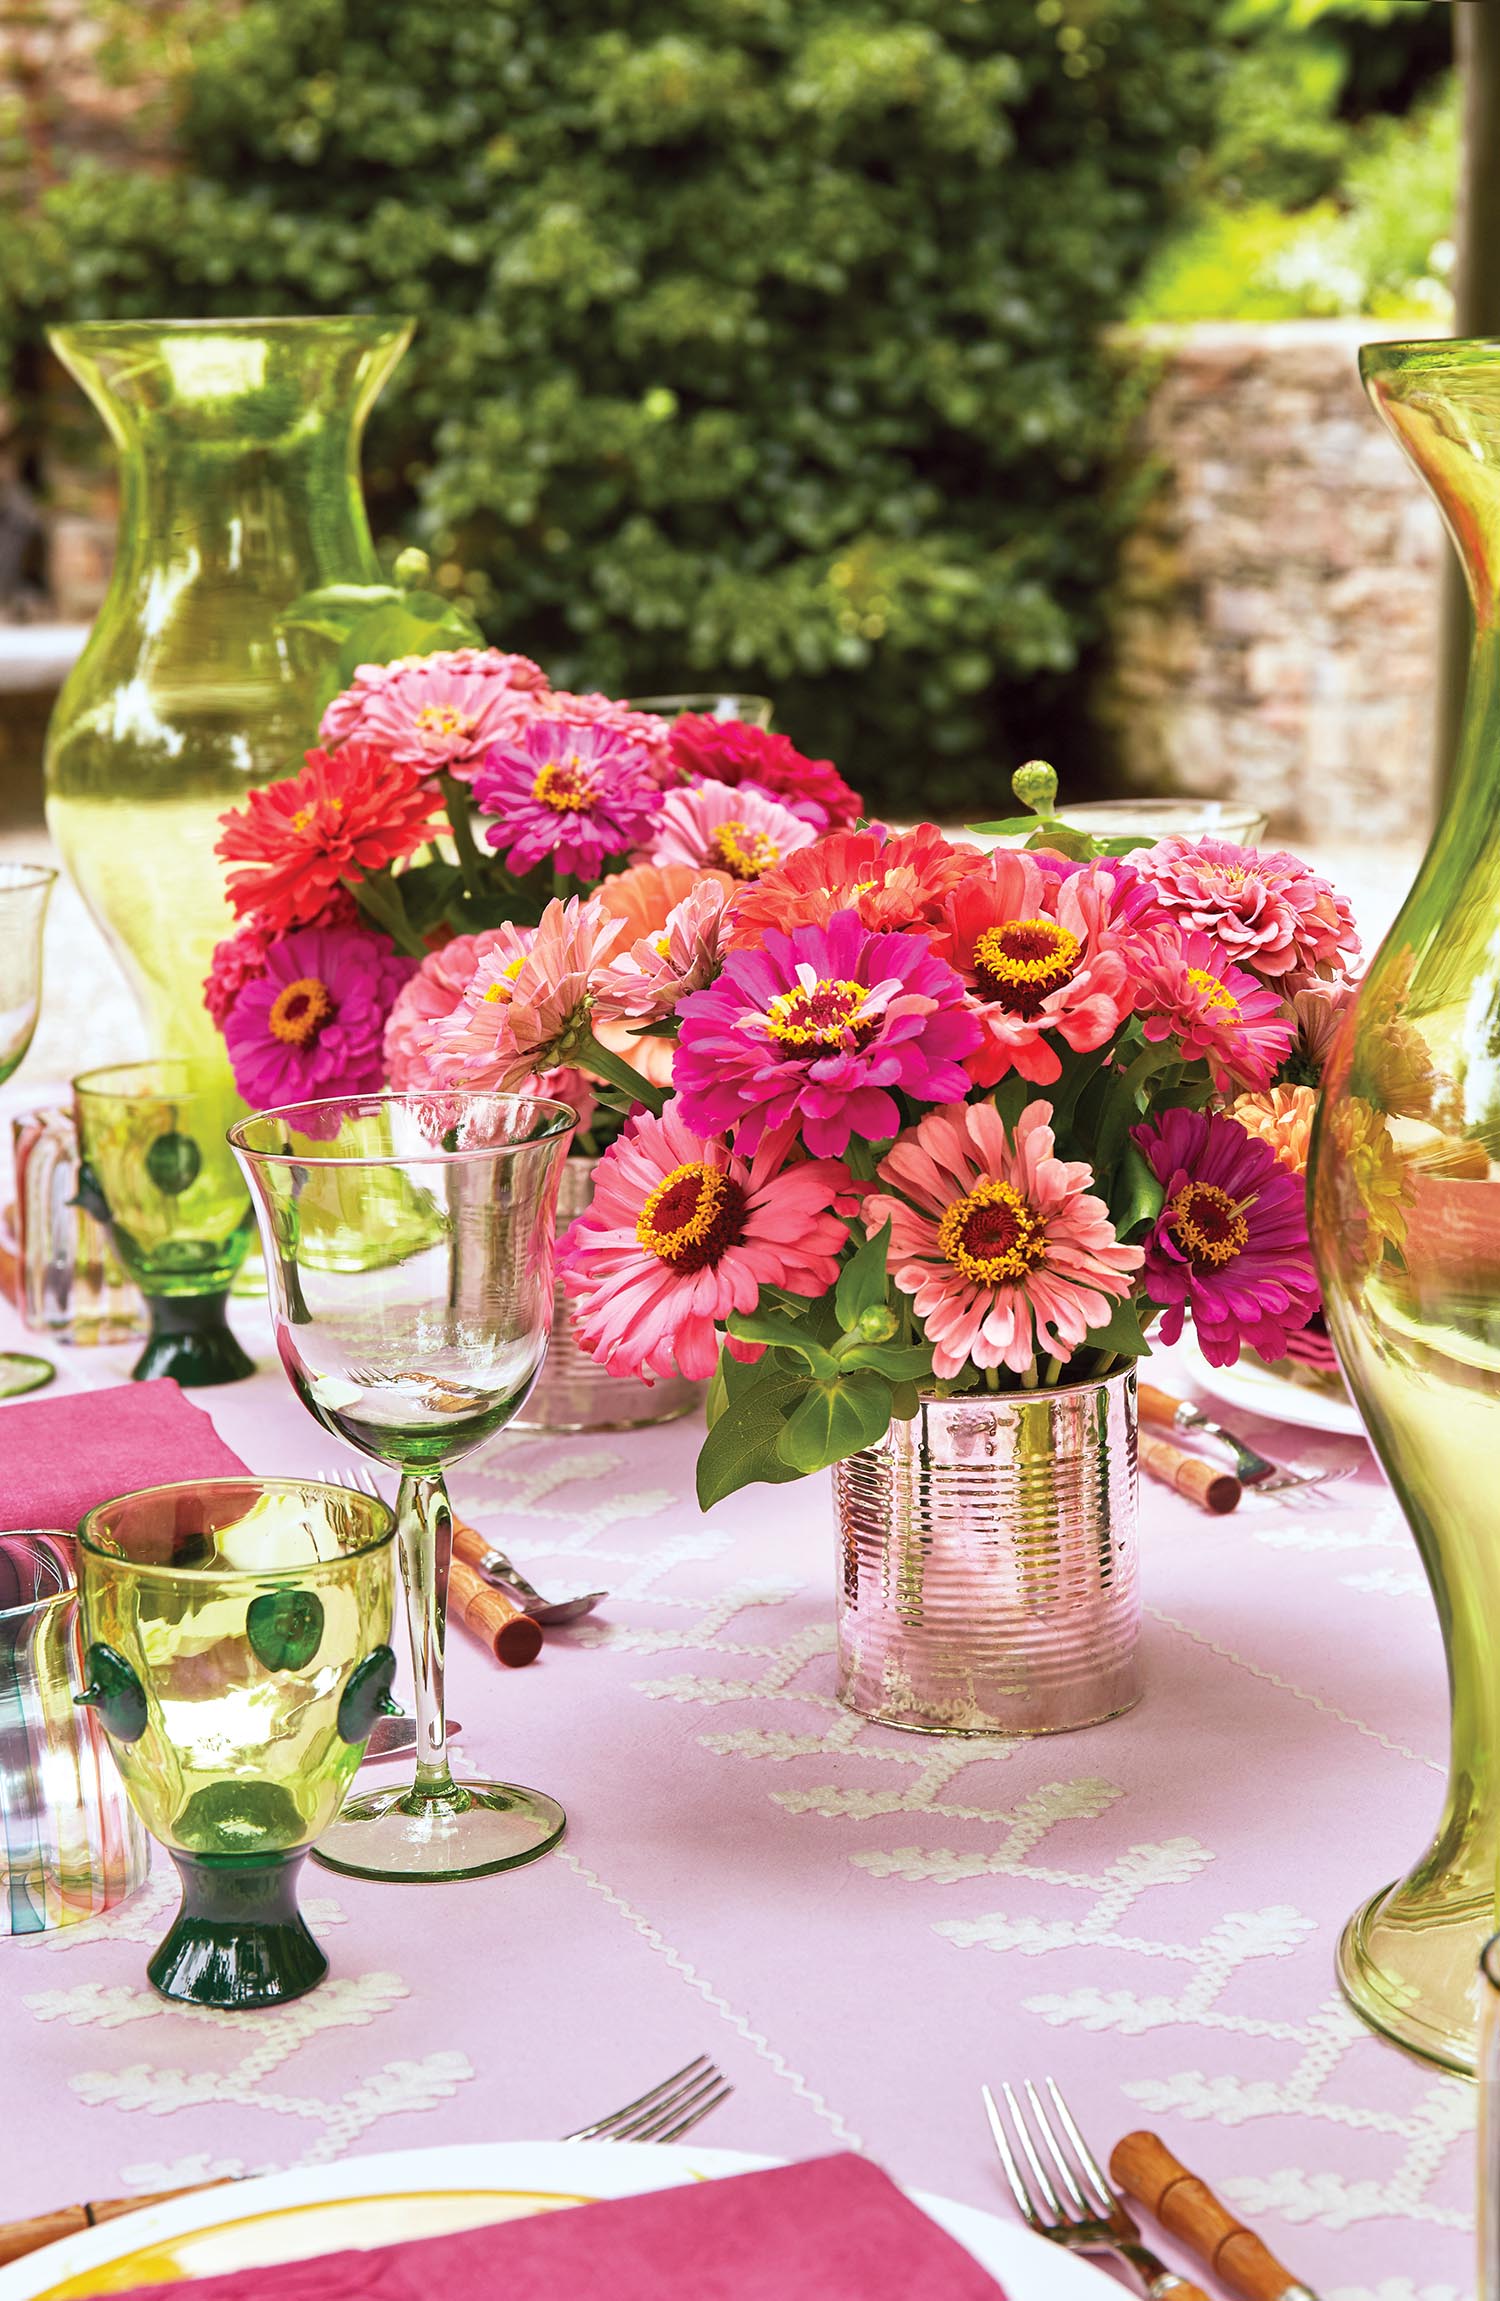 Vibrant Garden Bouquet - Designer's Choice